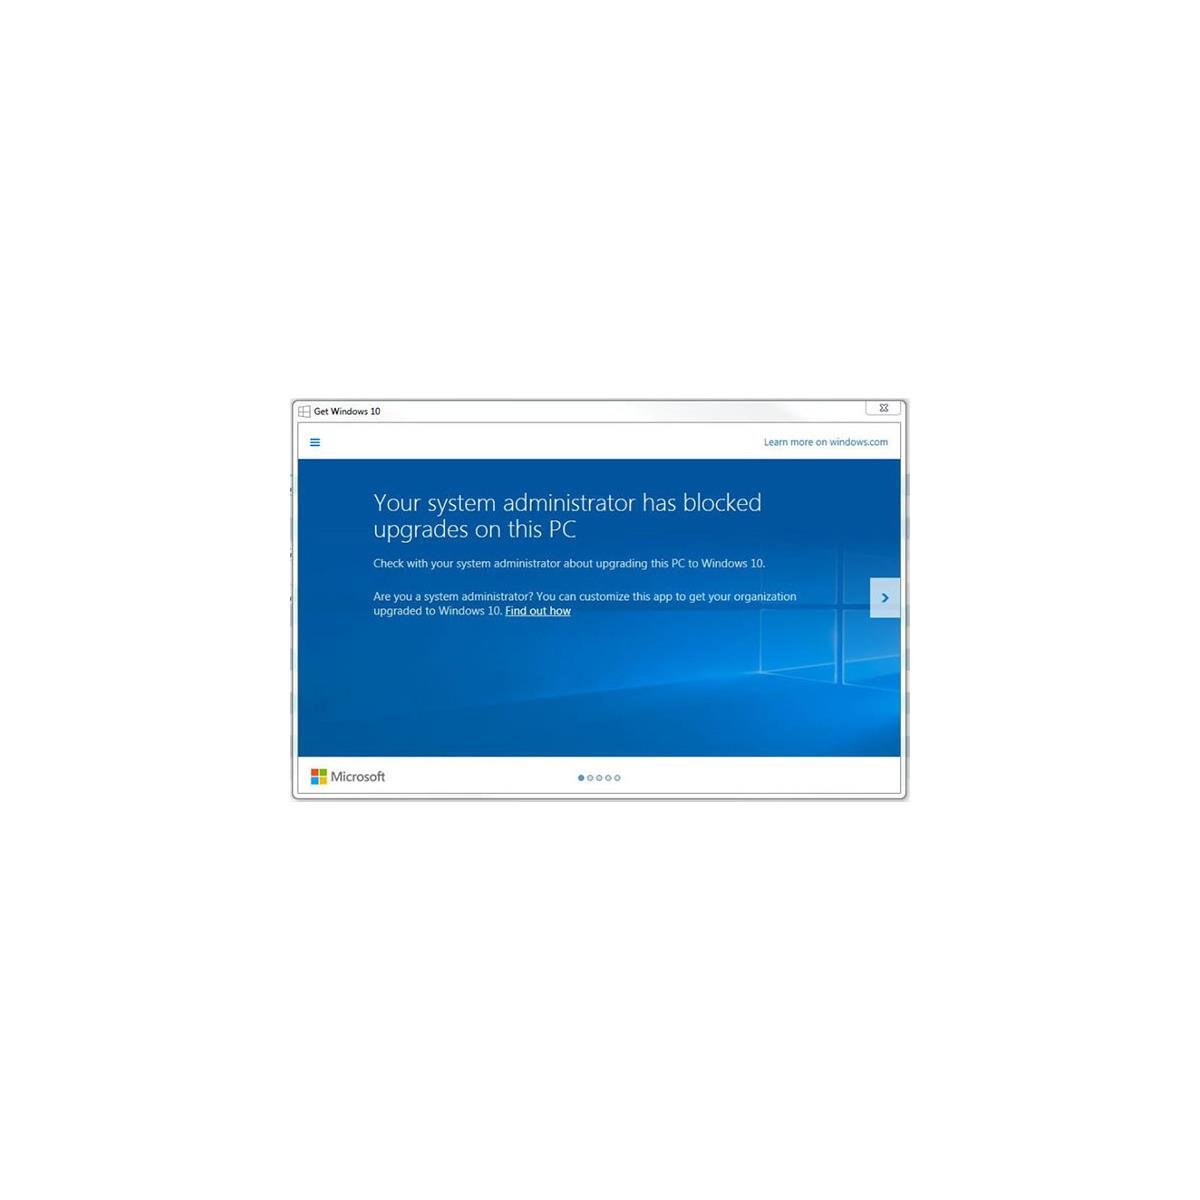 Microsoft Shames Administrators Who Block Windows 10 Upgrades With Nag Screens